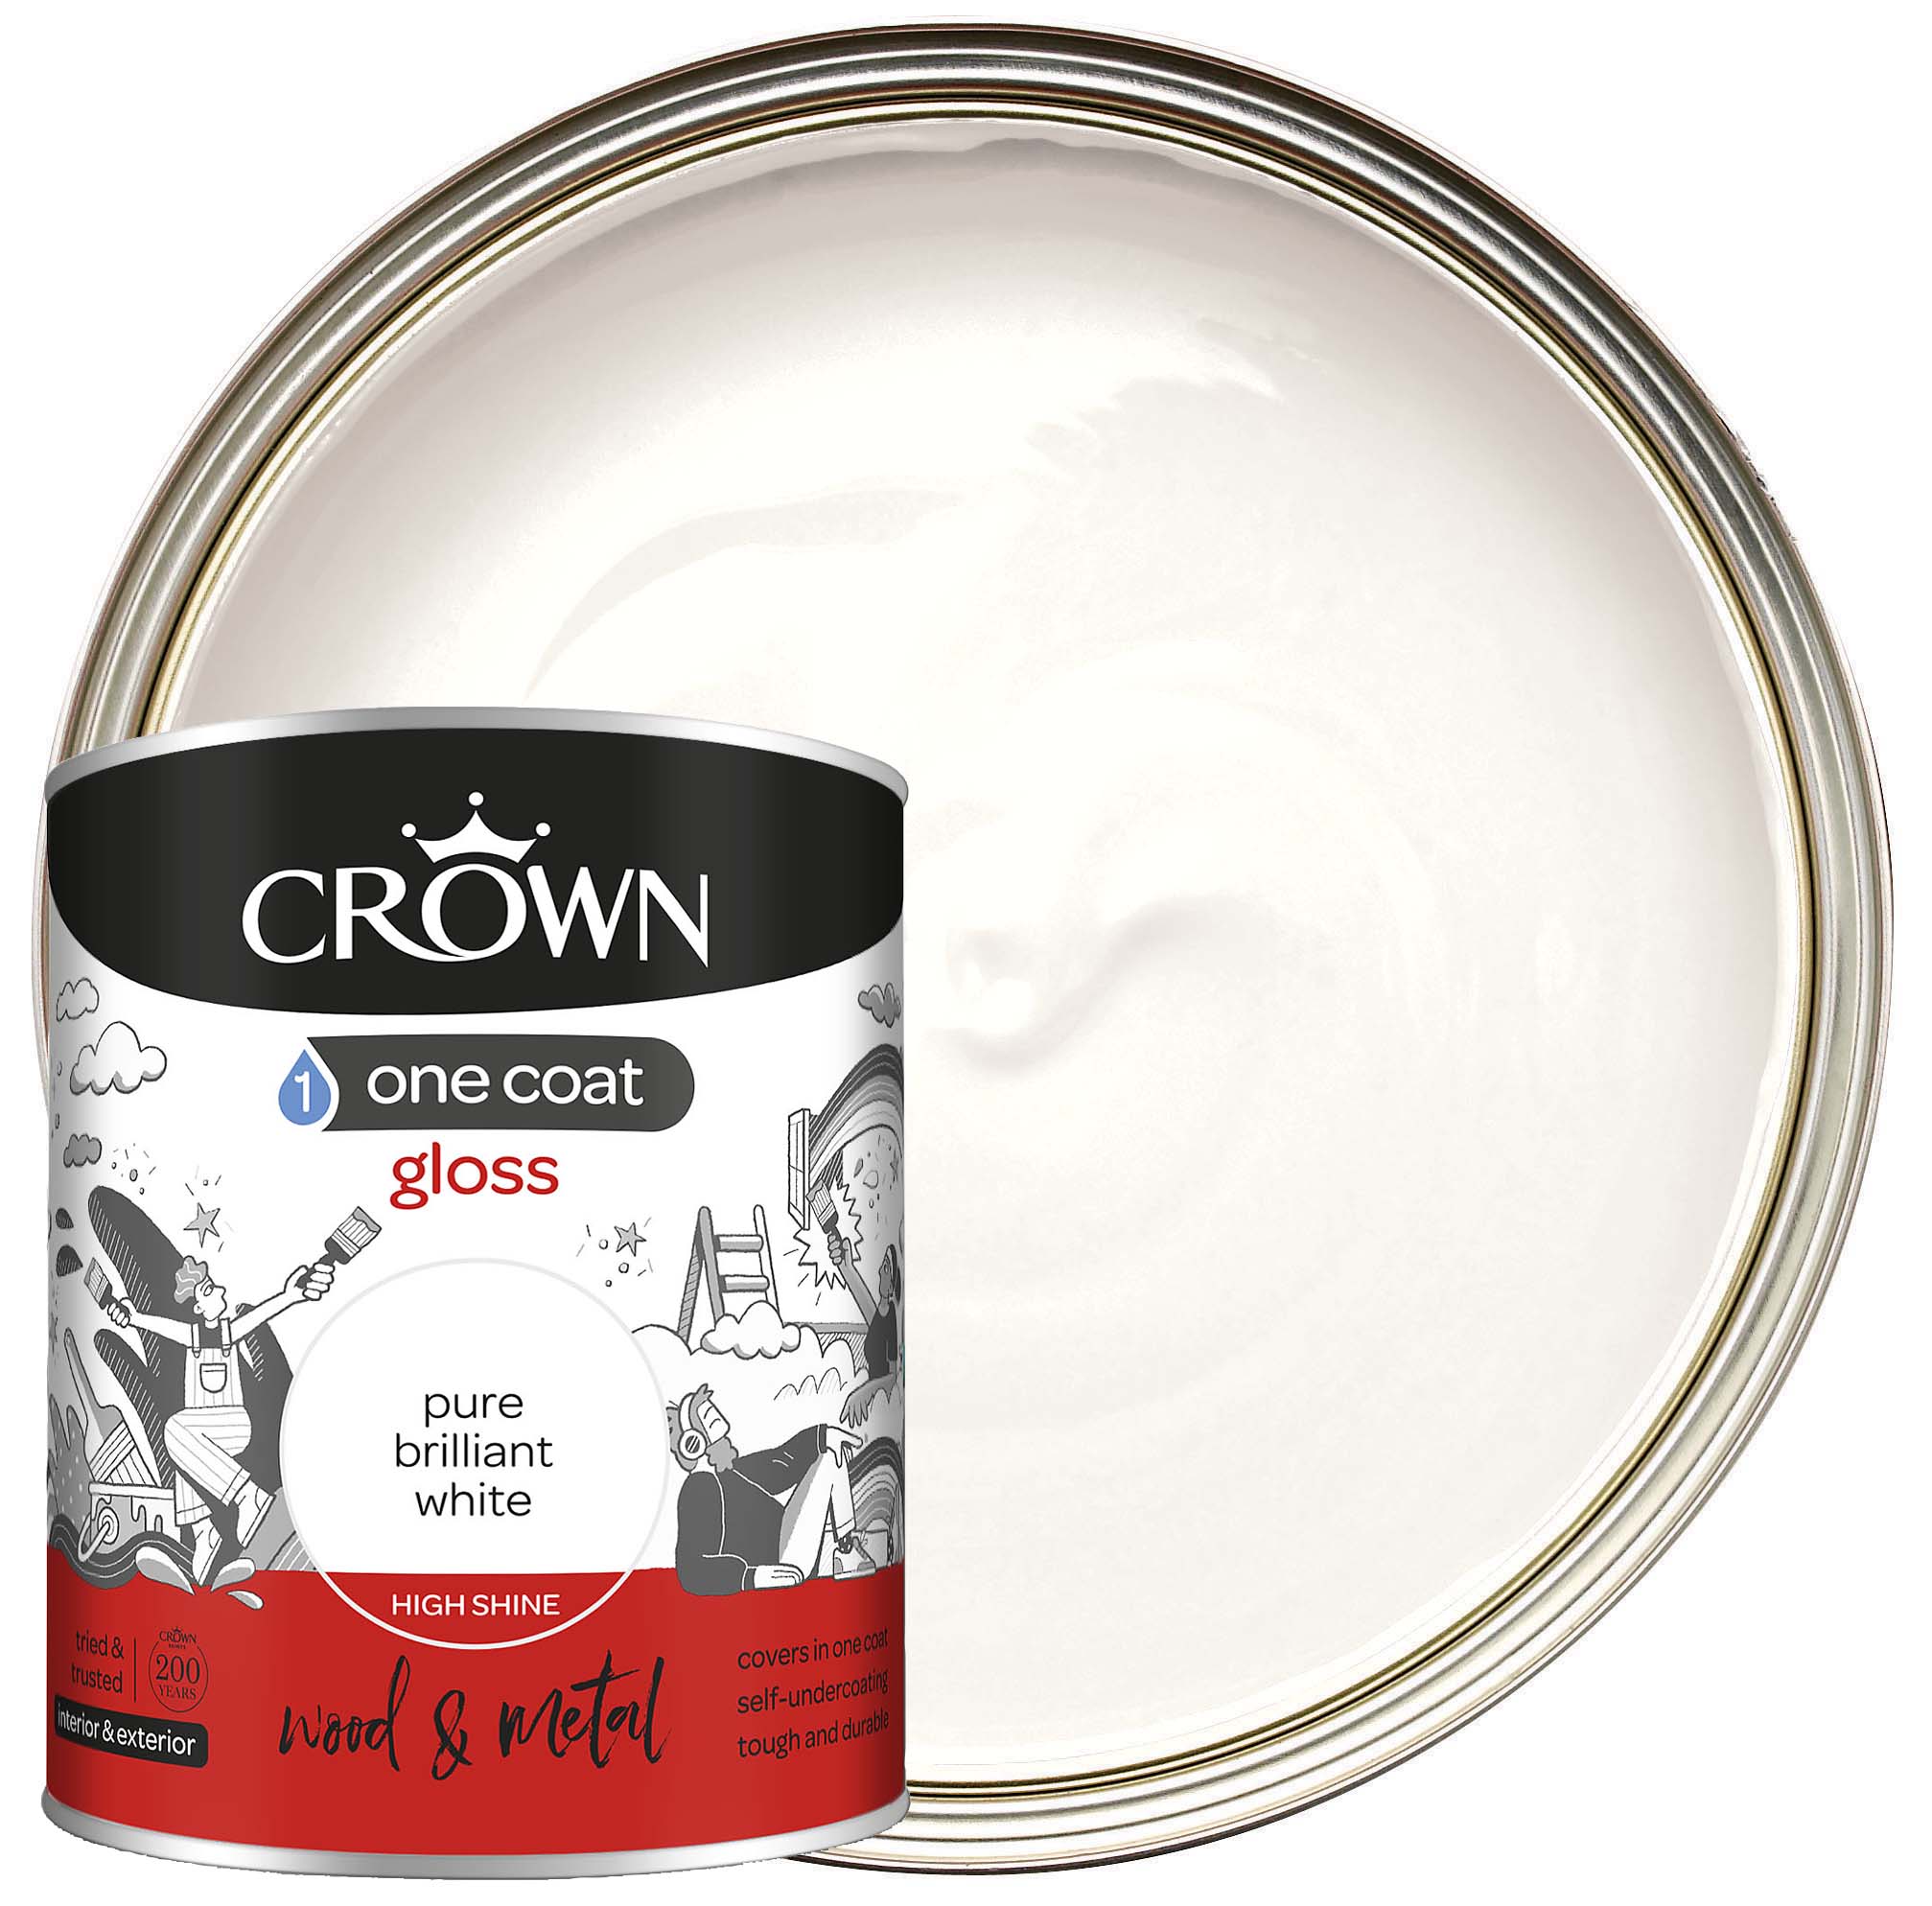 Crown One Coat Gloss Paint - Pure Brilliant White - 750ml